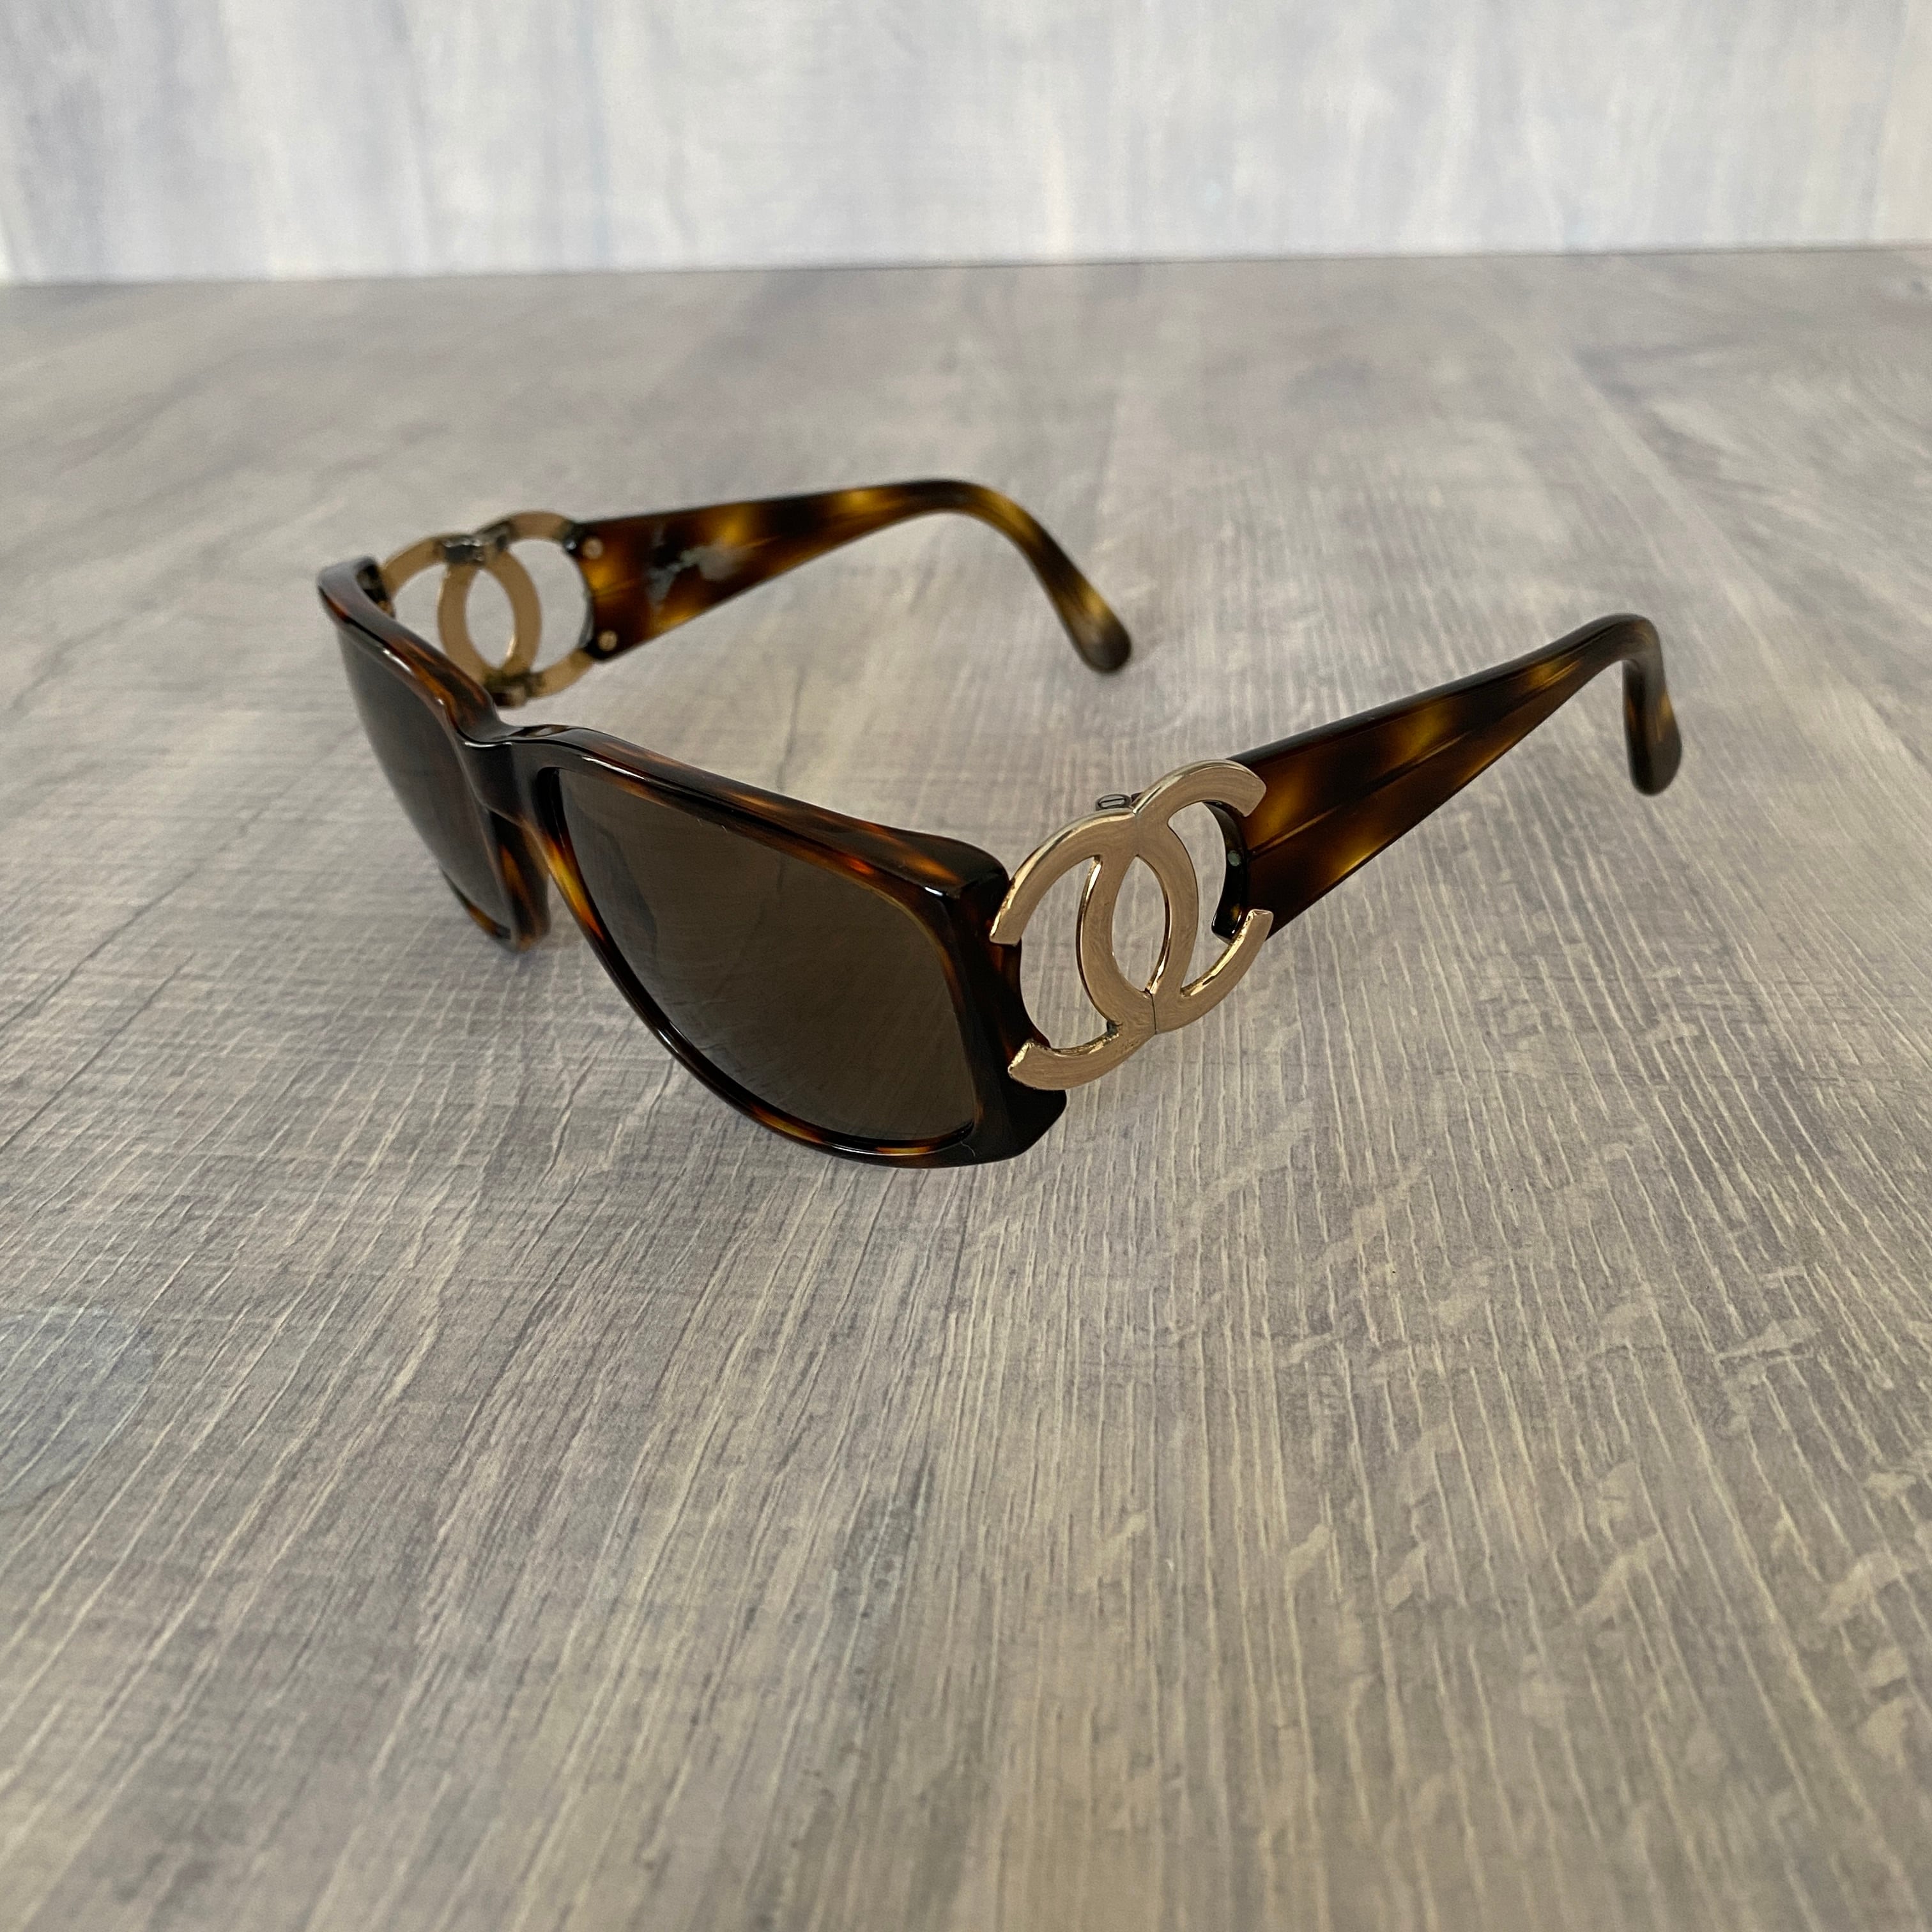 CHANELクリップオン眼鏡用フレーム ココマーク付ブラックサングラス